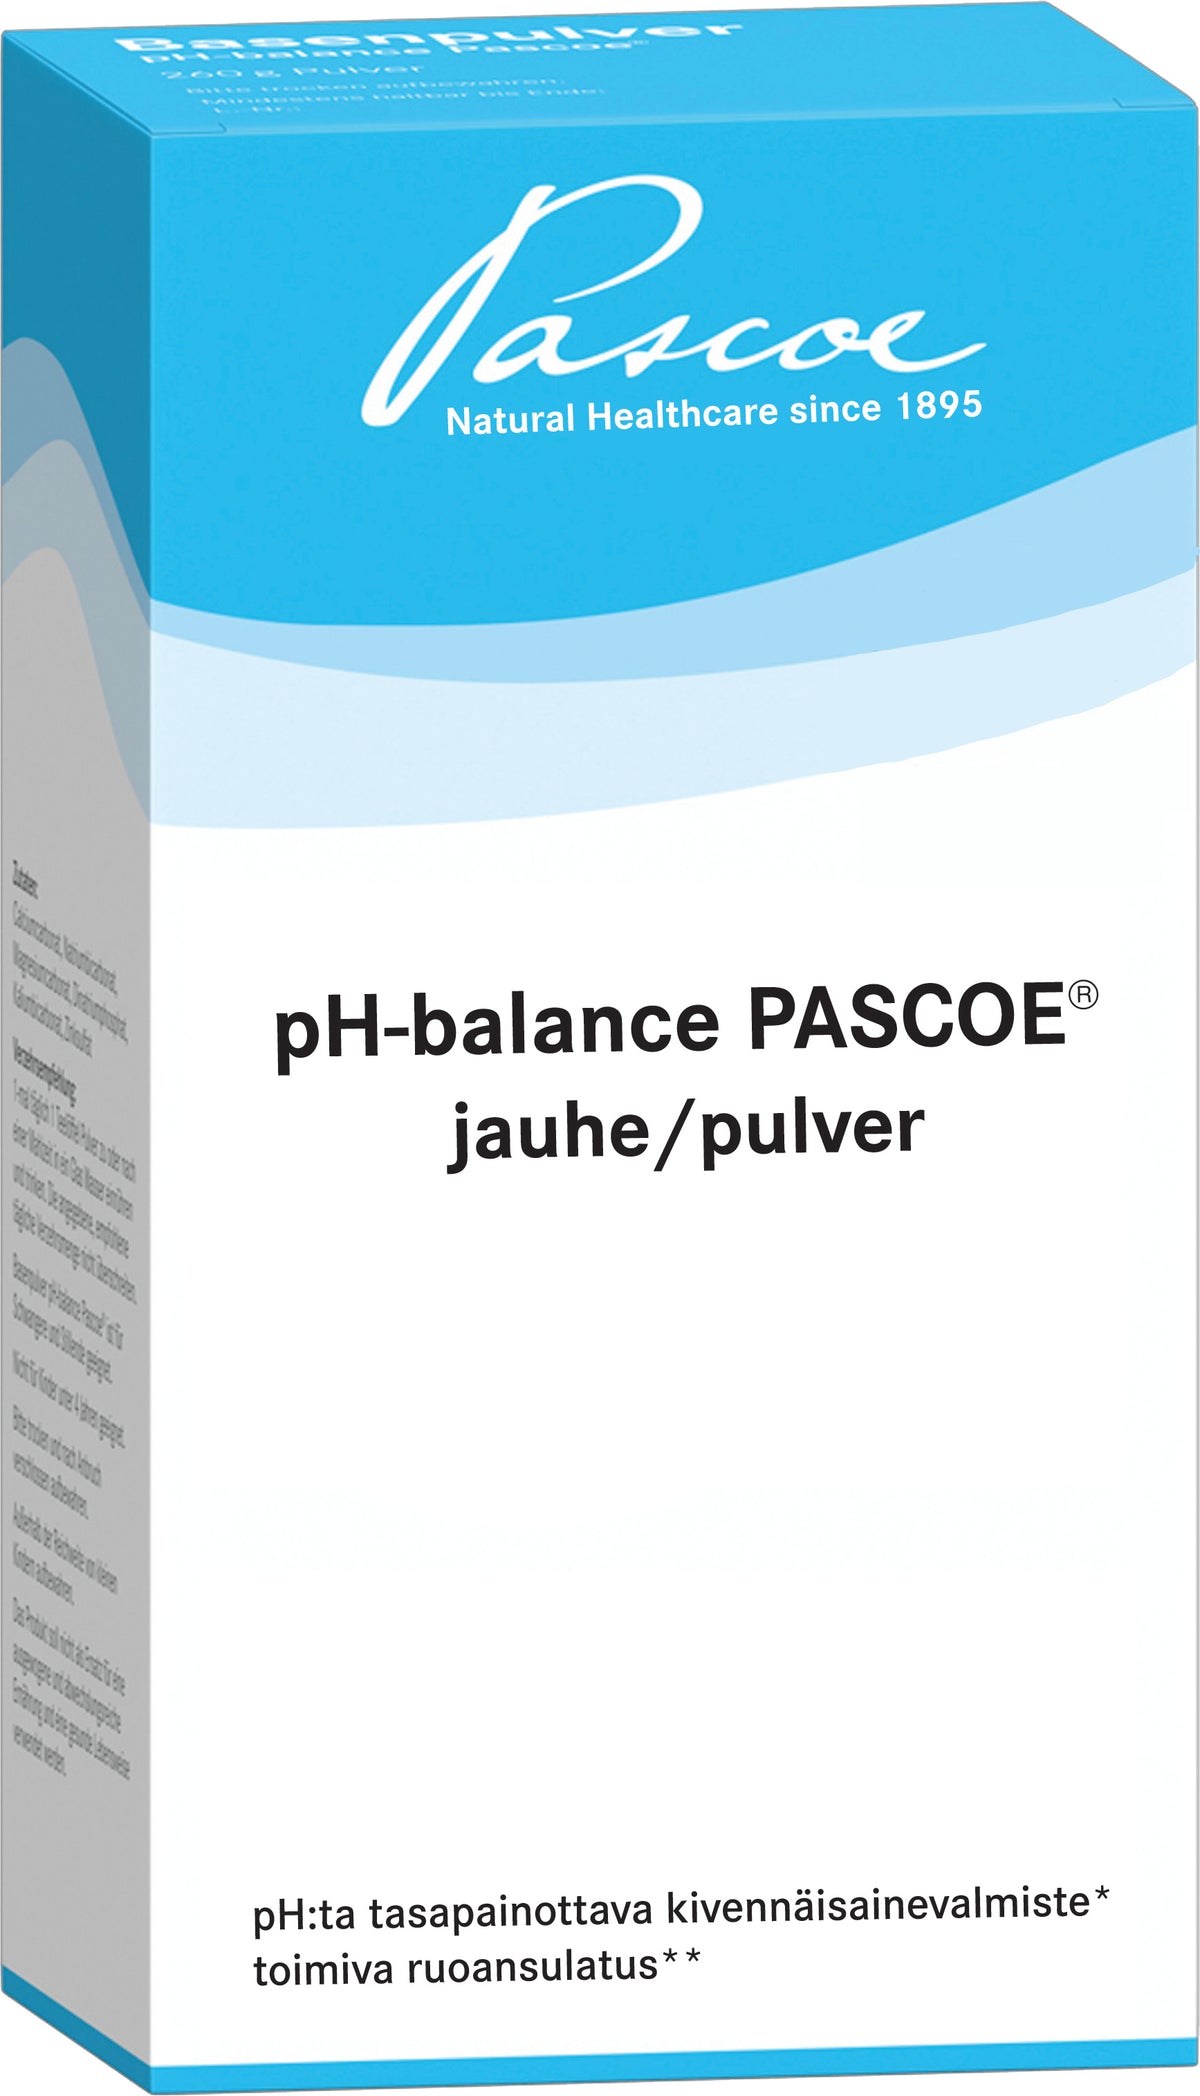 pH-balance PASCOE jauhe 260 g.